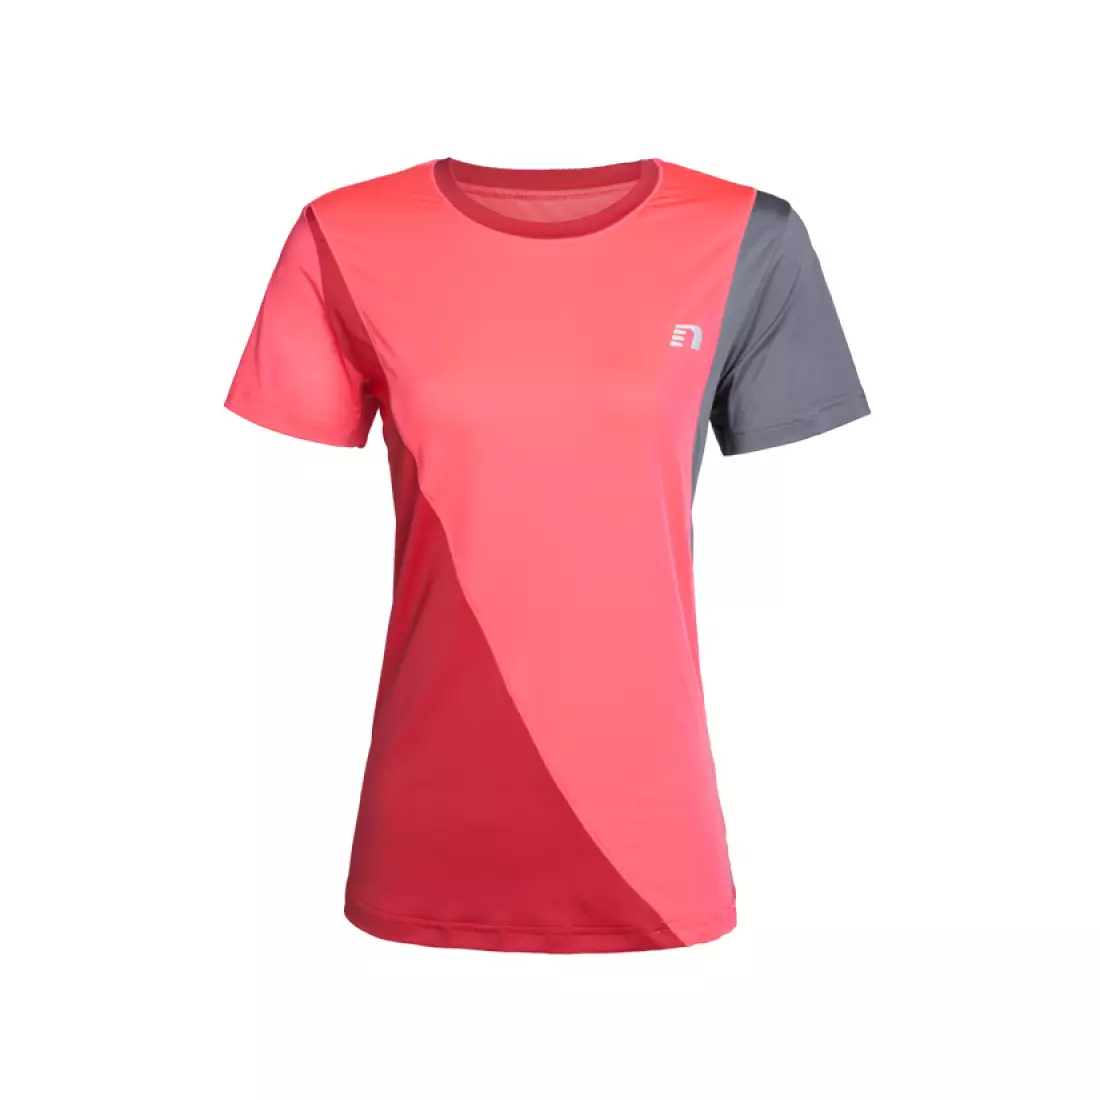 NEWLINE IMOTION TEE 10804-274 - women's running T-shirt